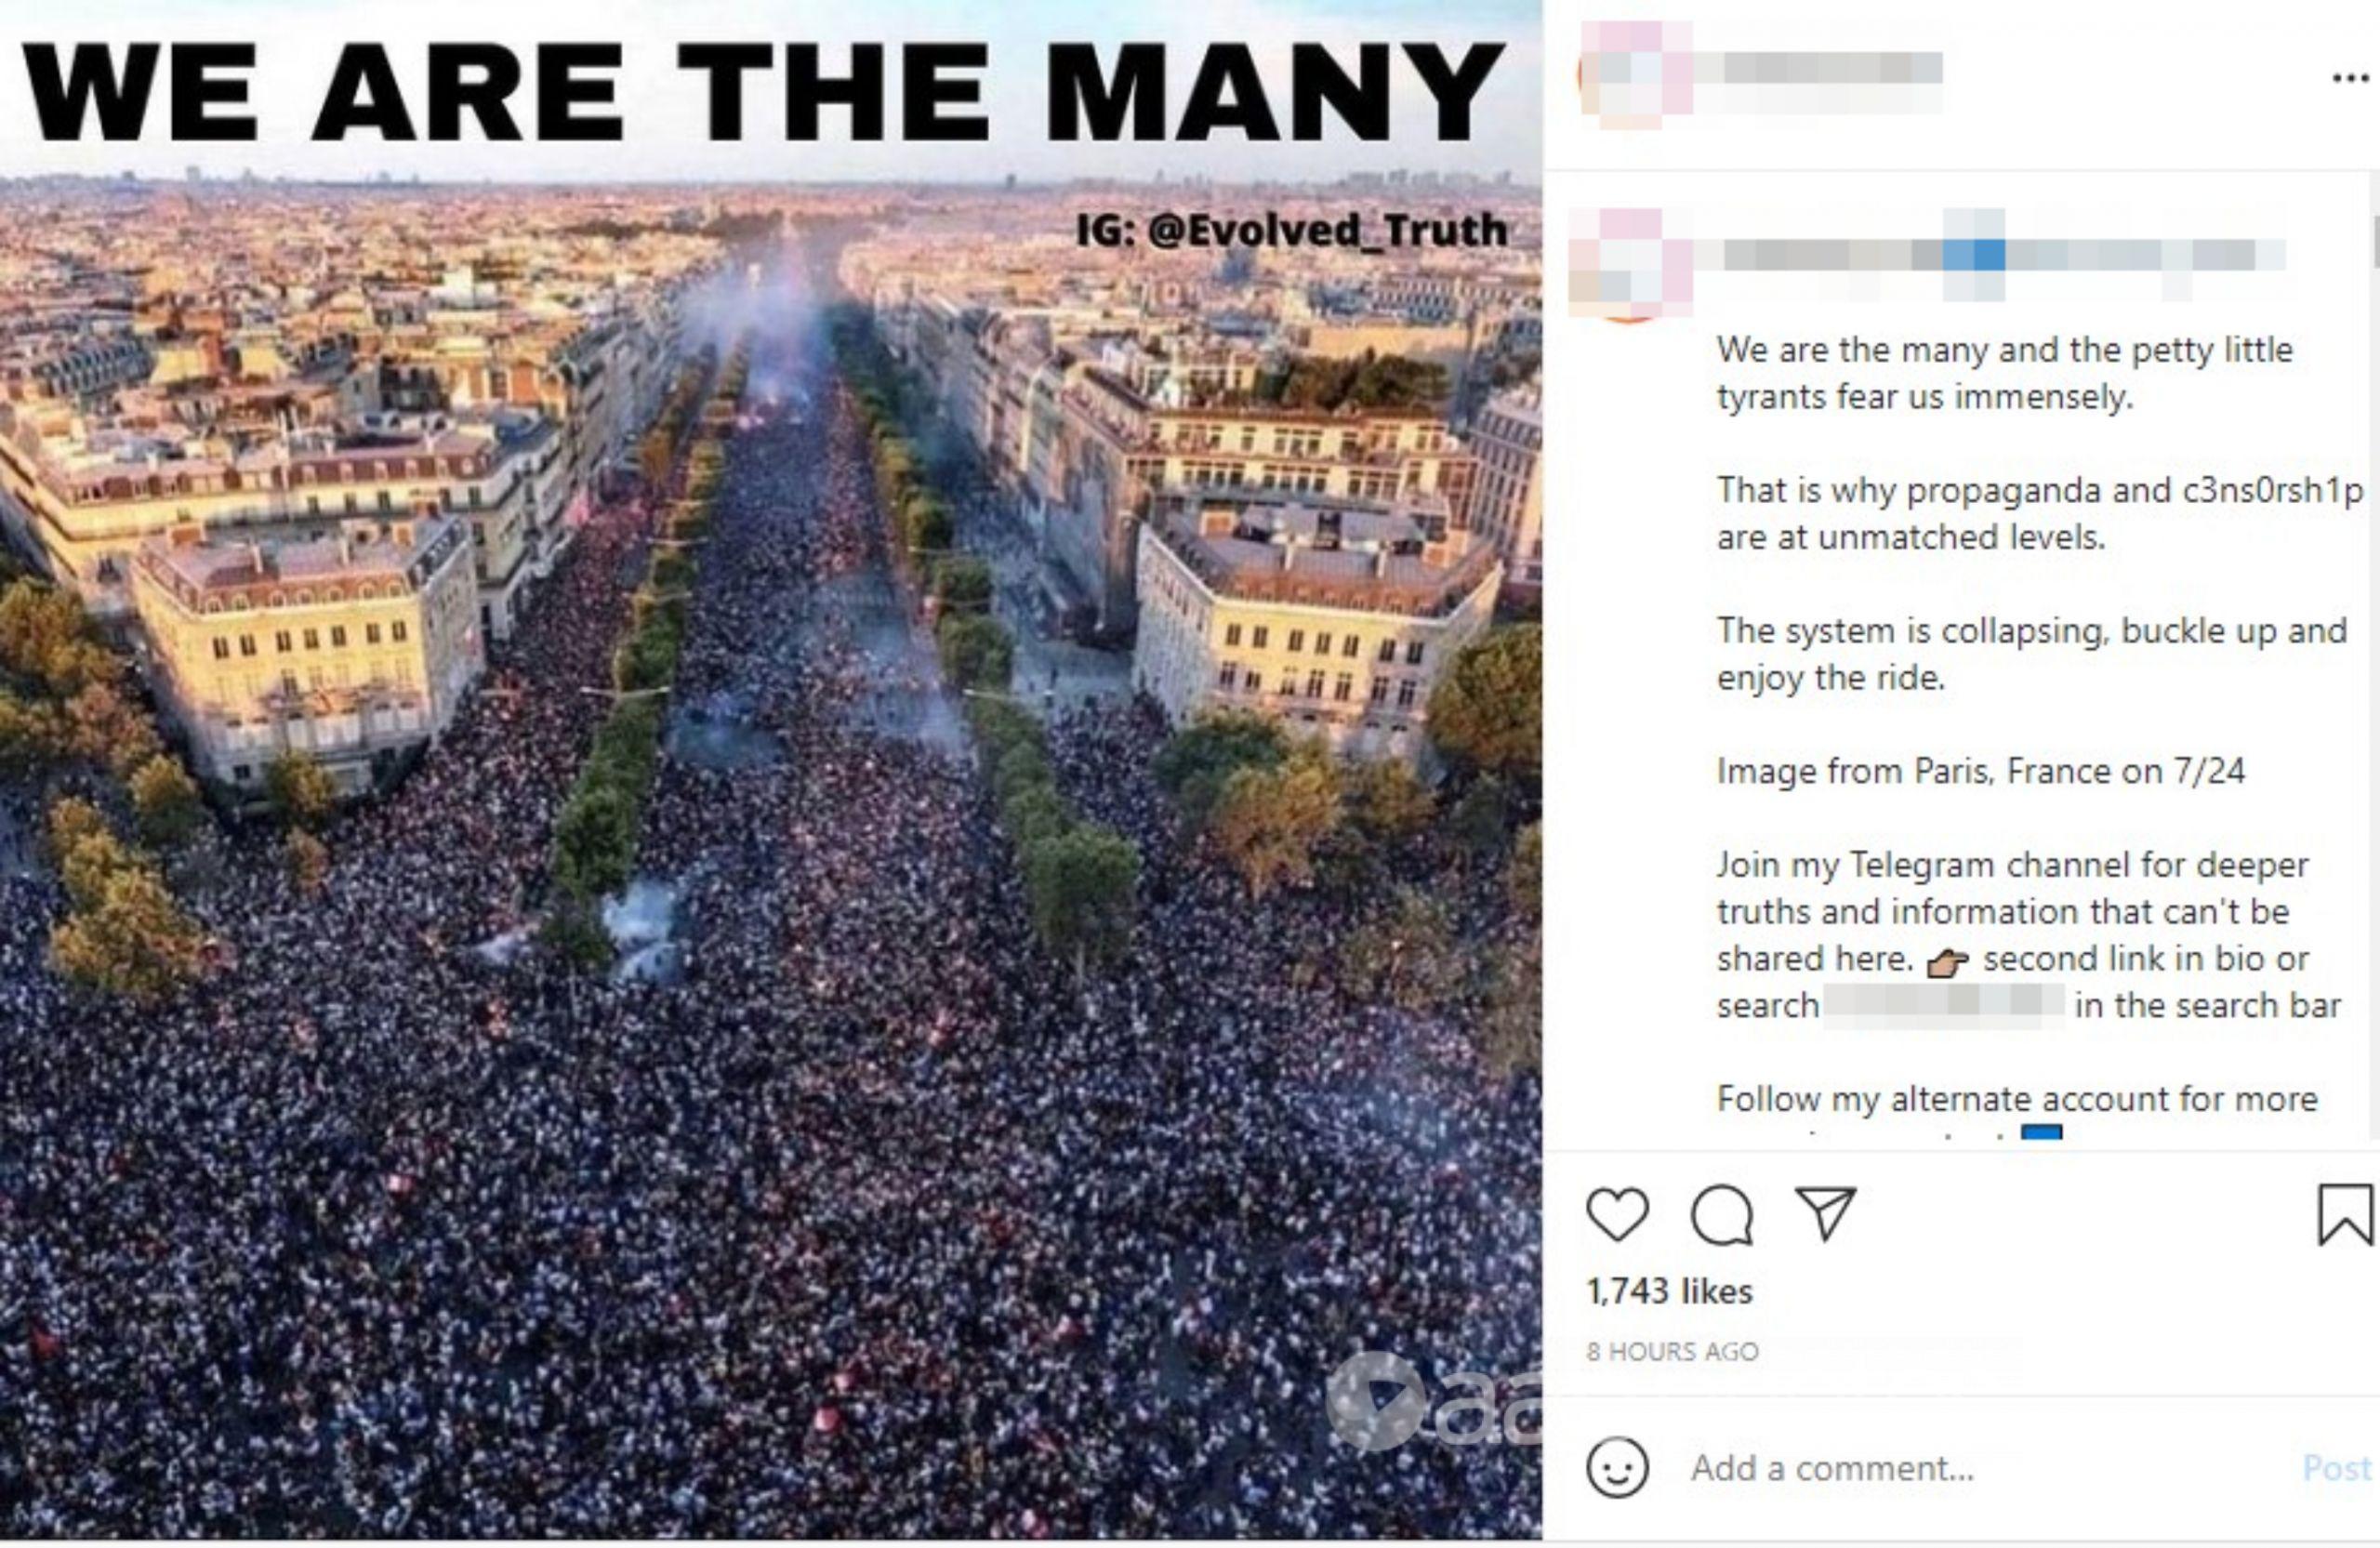 The Instagram post